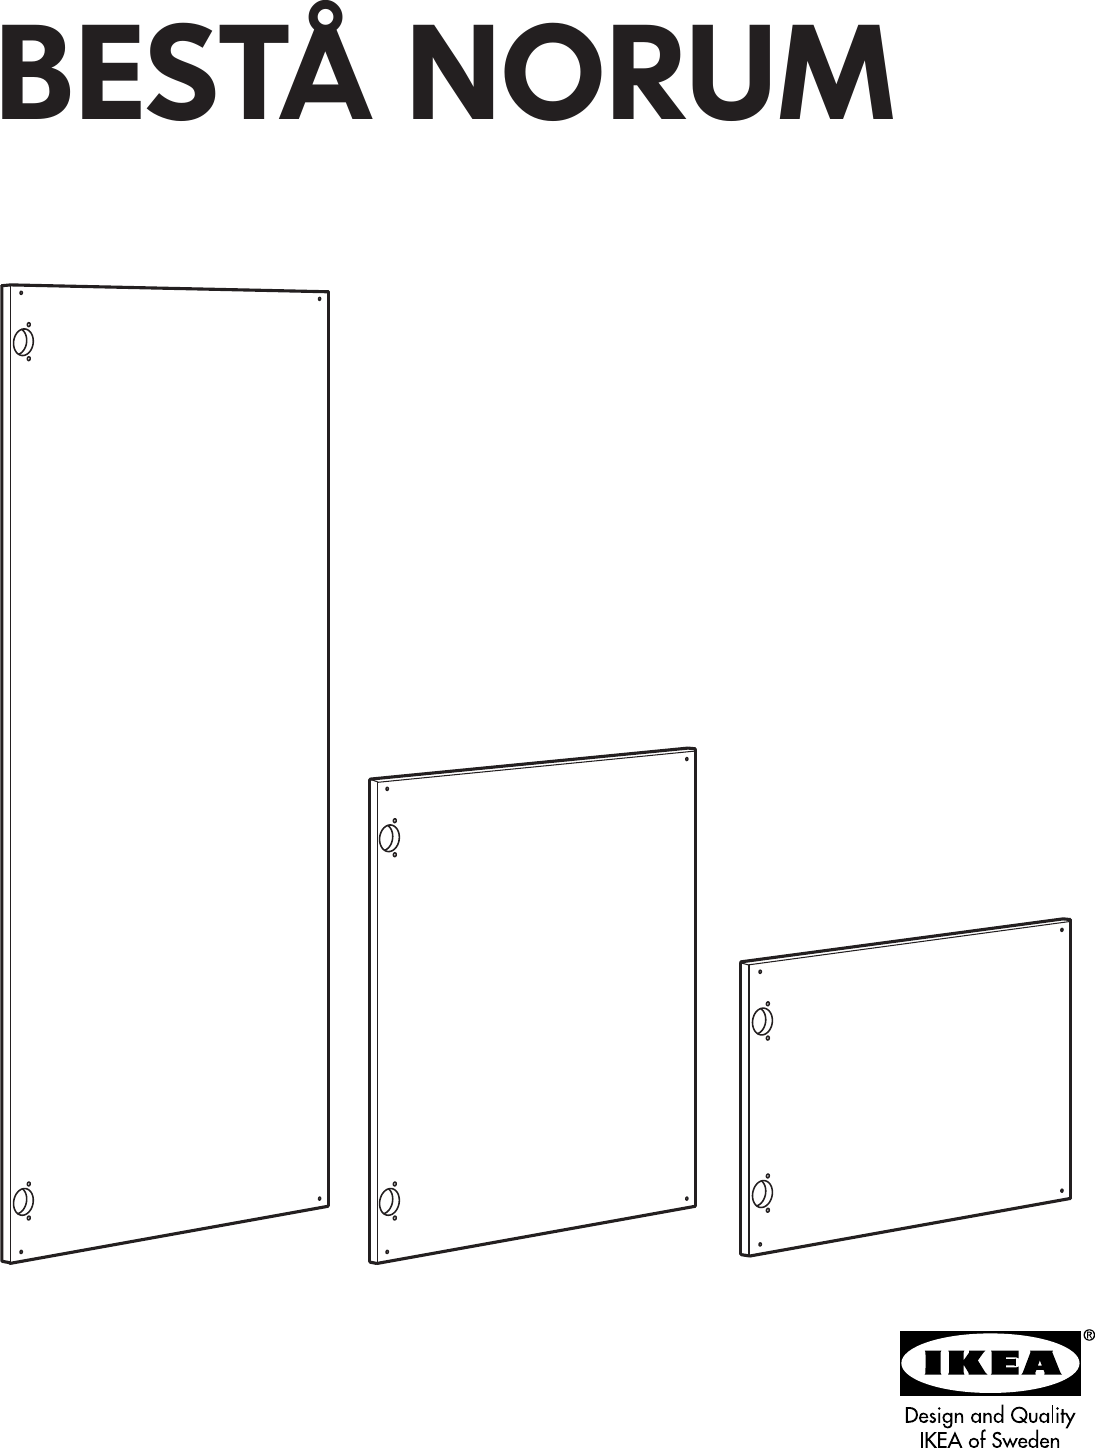 Page 1 of 8 - Ikea Ikea-Besta-Norum-Door-24X15-Assembly-Instruction